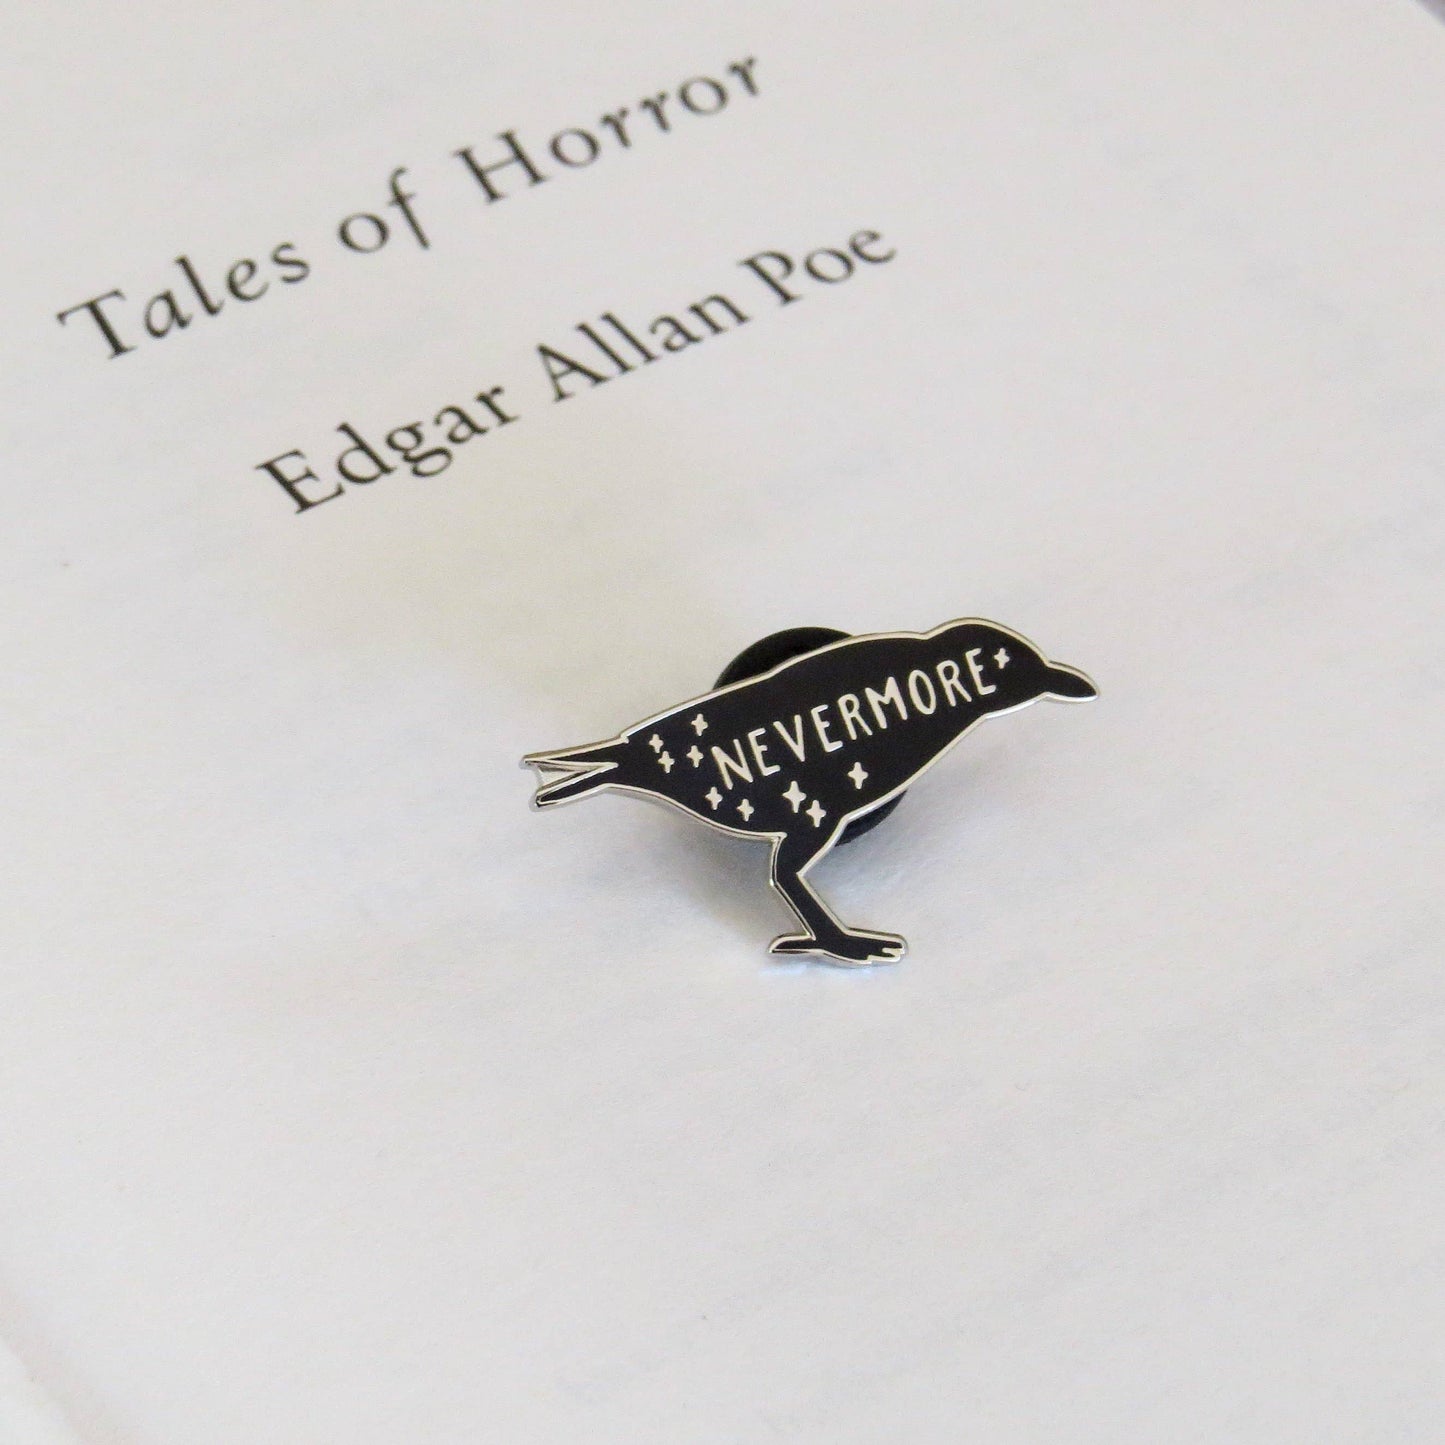 The Raven Edgar Allan Poe Enamel Pin - Gothic Literature Collection